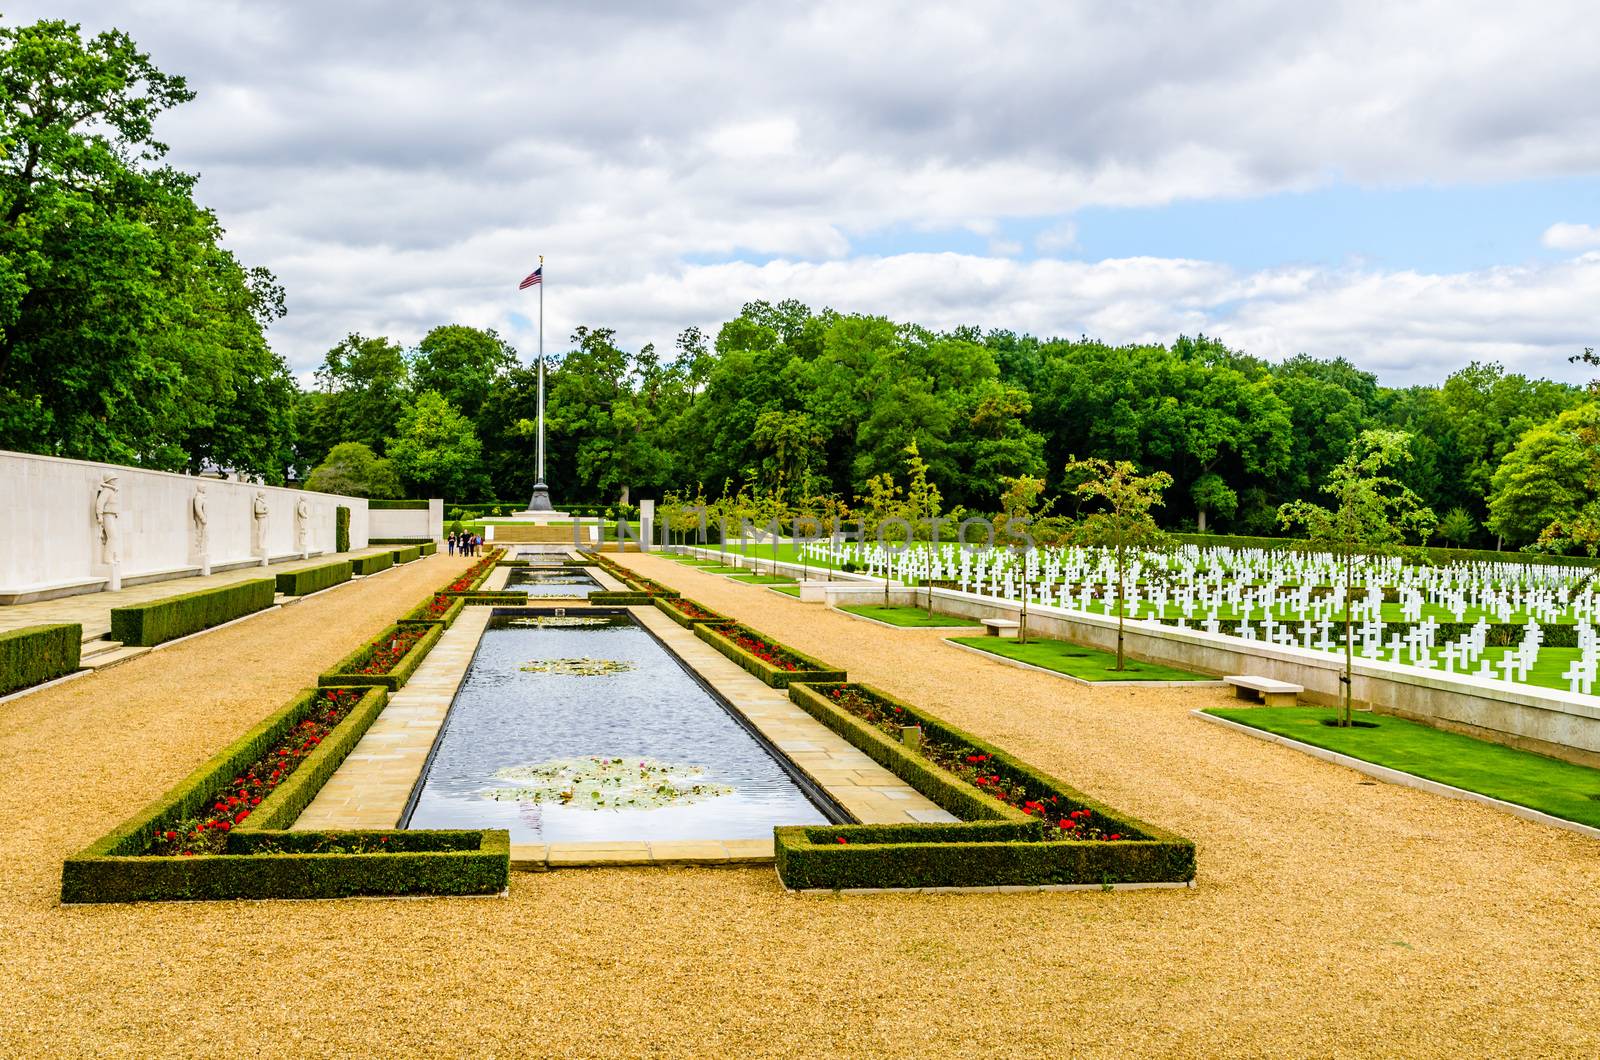 Cambridge, UK - 08 12 2017: American Cemetery and Memorial in the sun by mauricallari